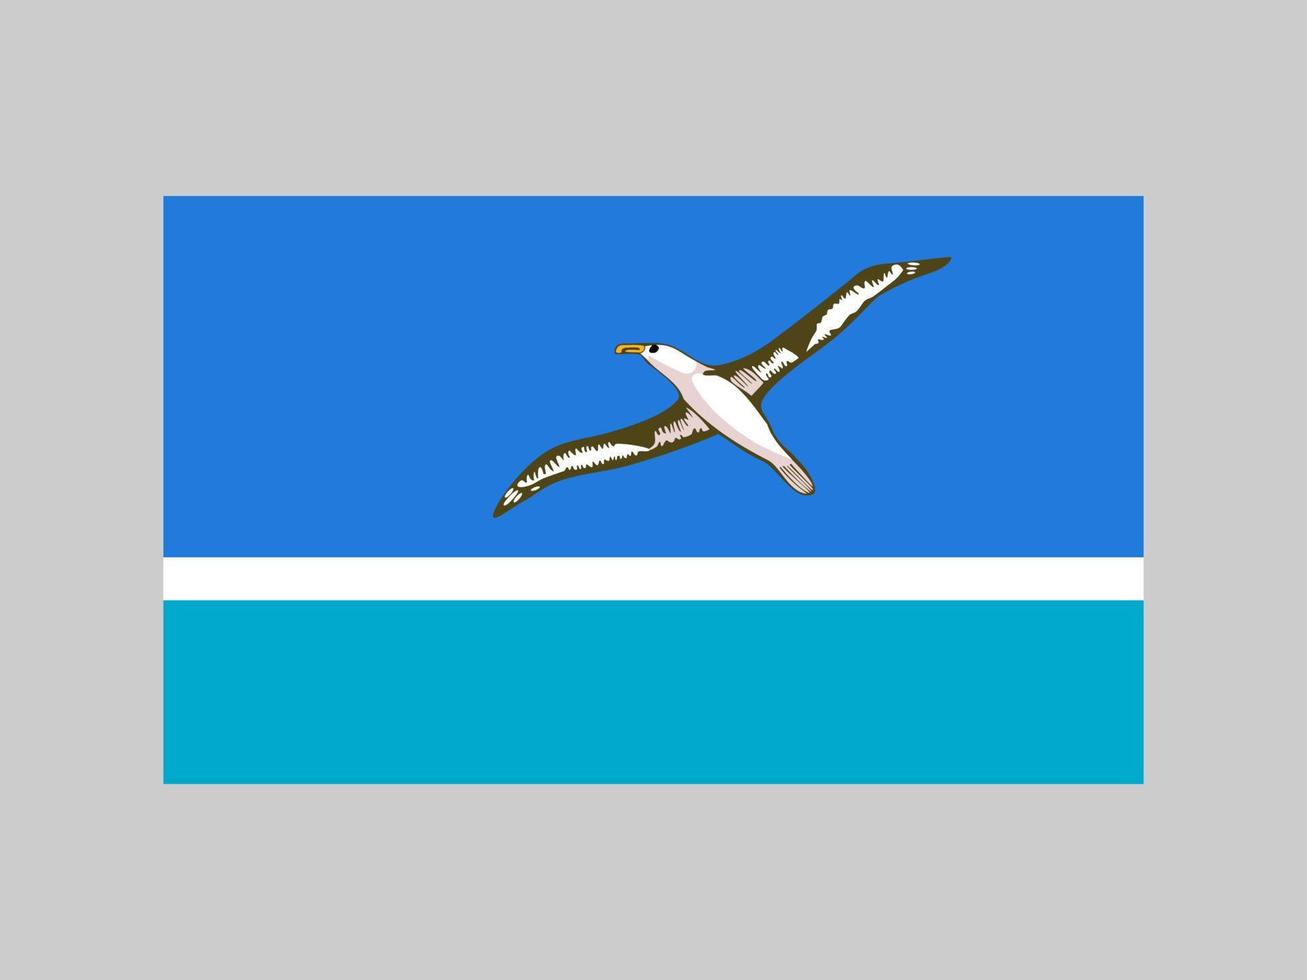 Midway-Atoll-Flagge, offizielle Farben und Proportionen. Vektor-Illustration. vektor